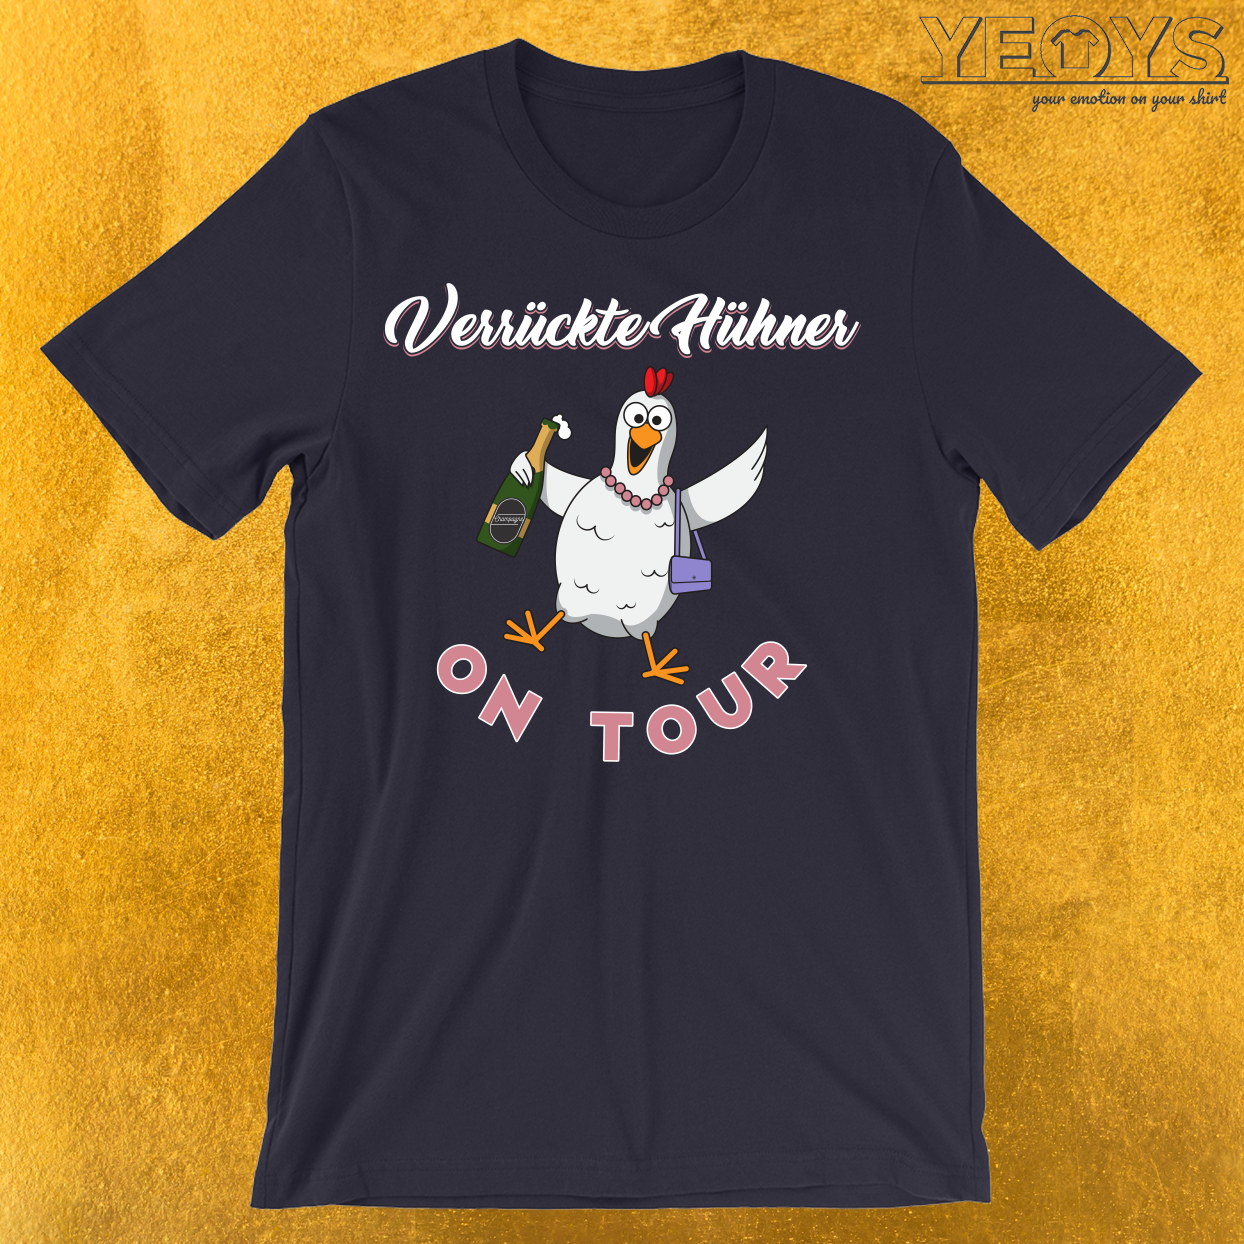 Verrückte Hühner on Tour T-Shirt